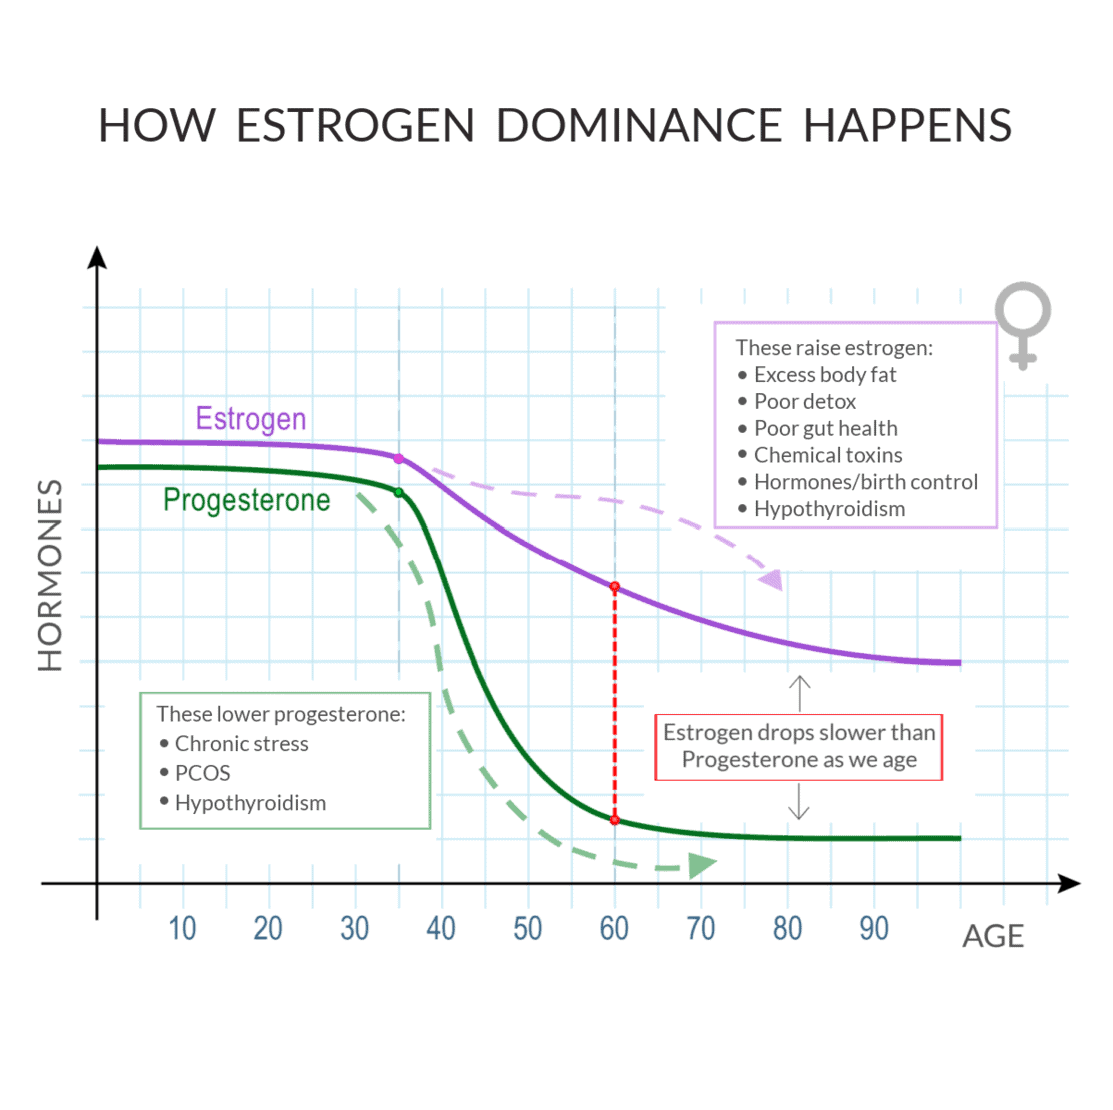 Line graph showing drops in estrogen and progesterone as women age, plus lifestyle factors that further raise estrogen and lower progesterone